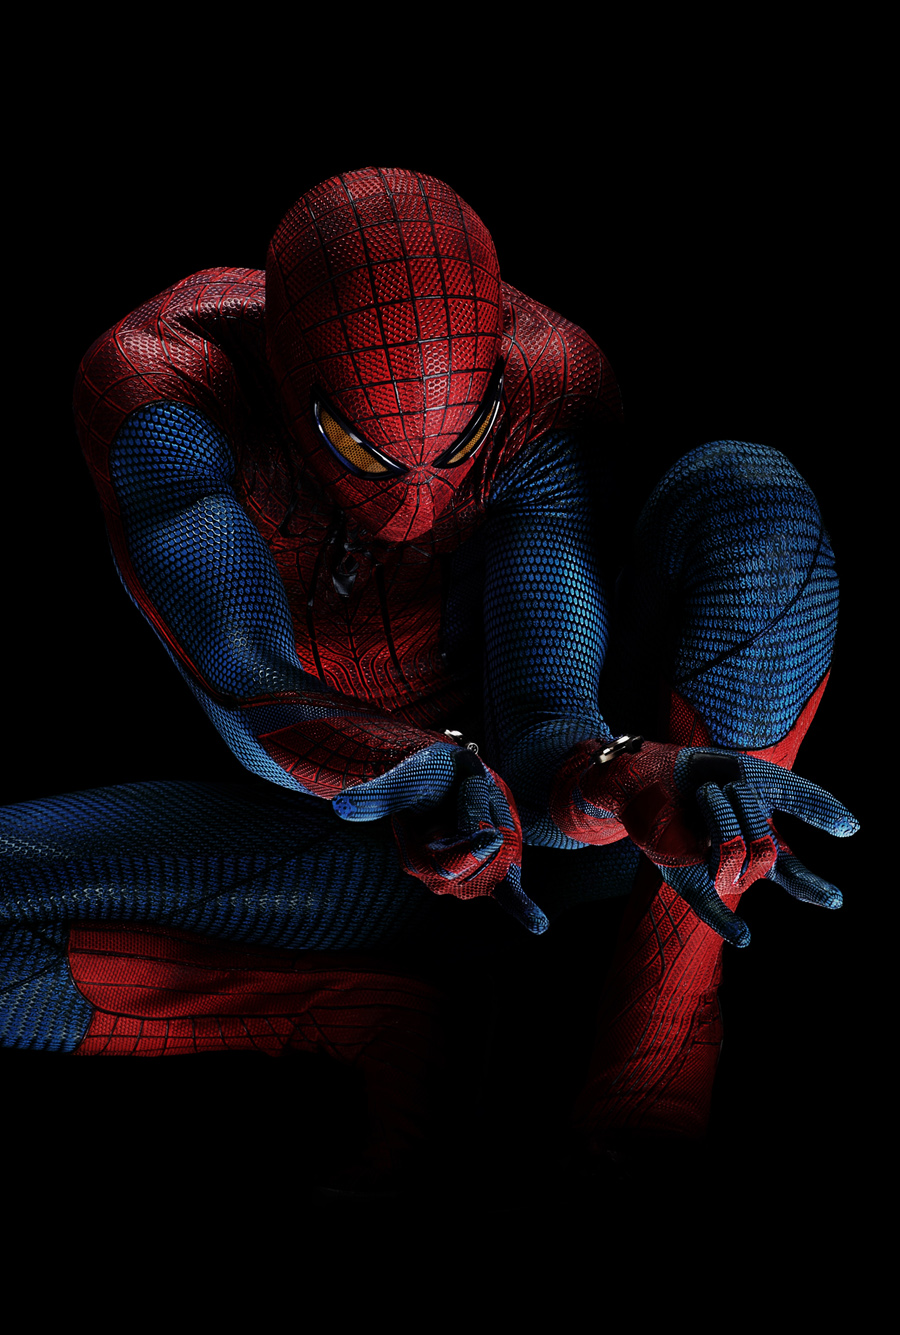 Spiderman 2012